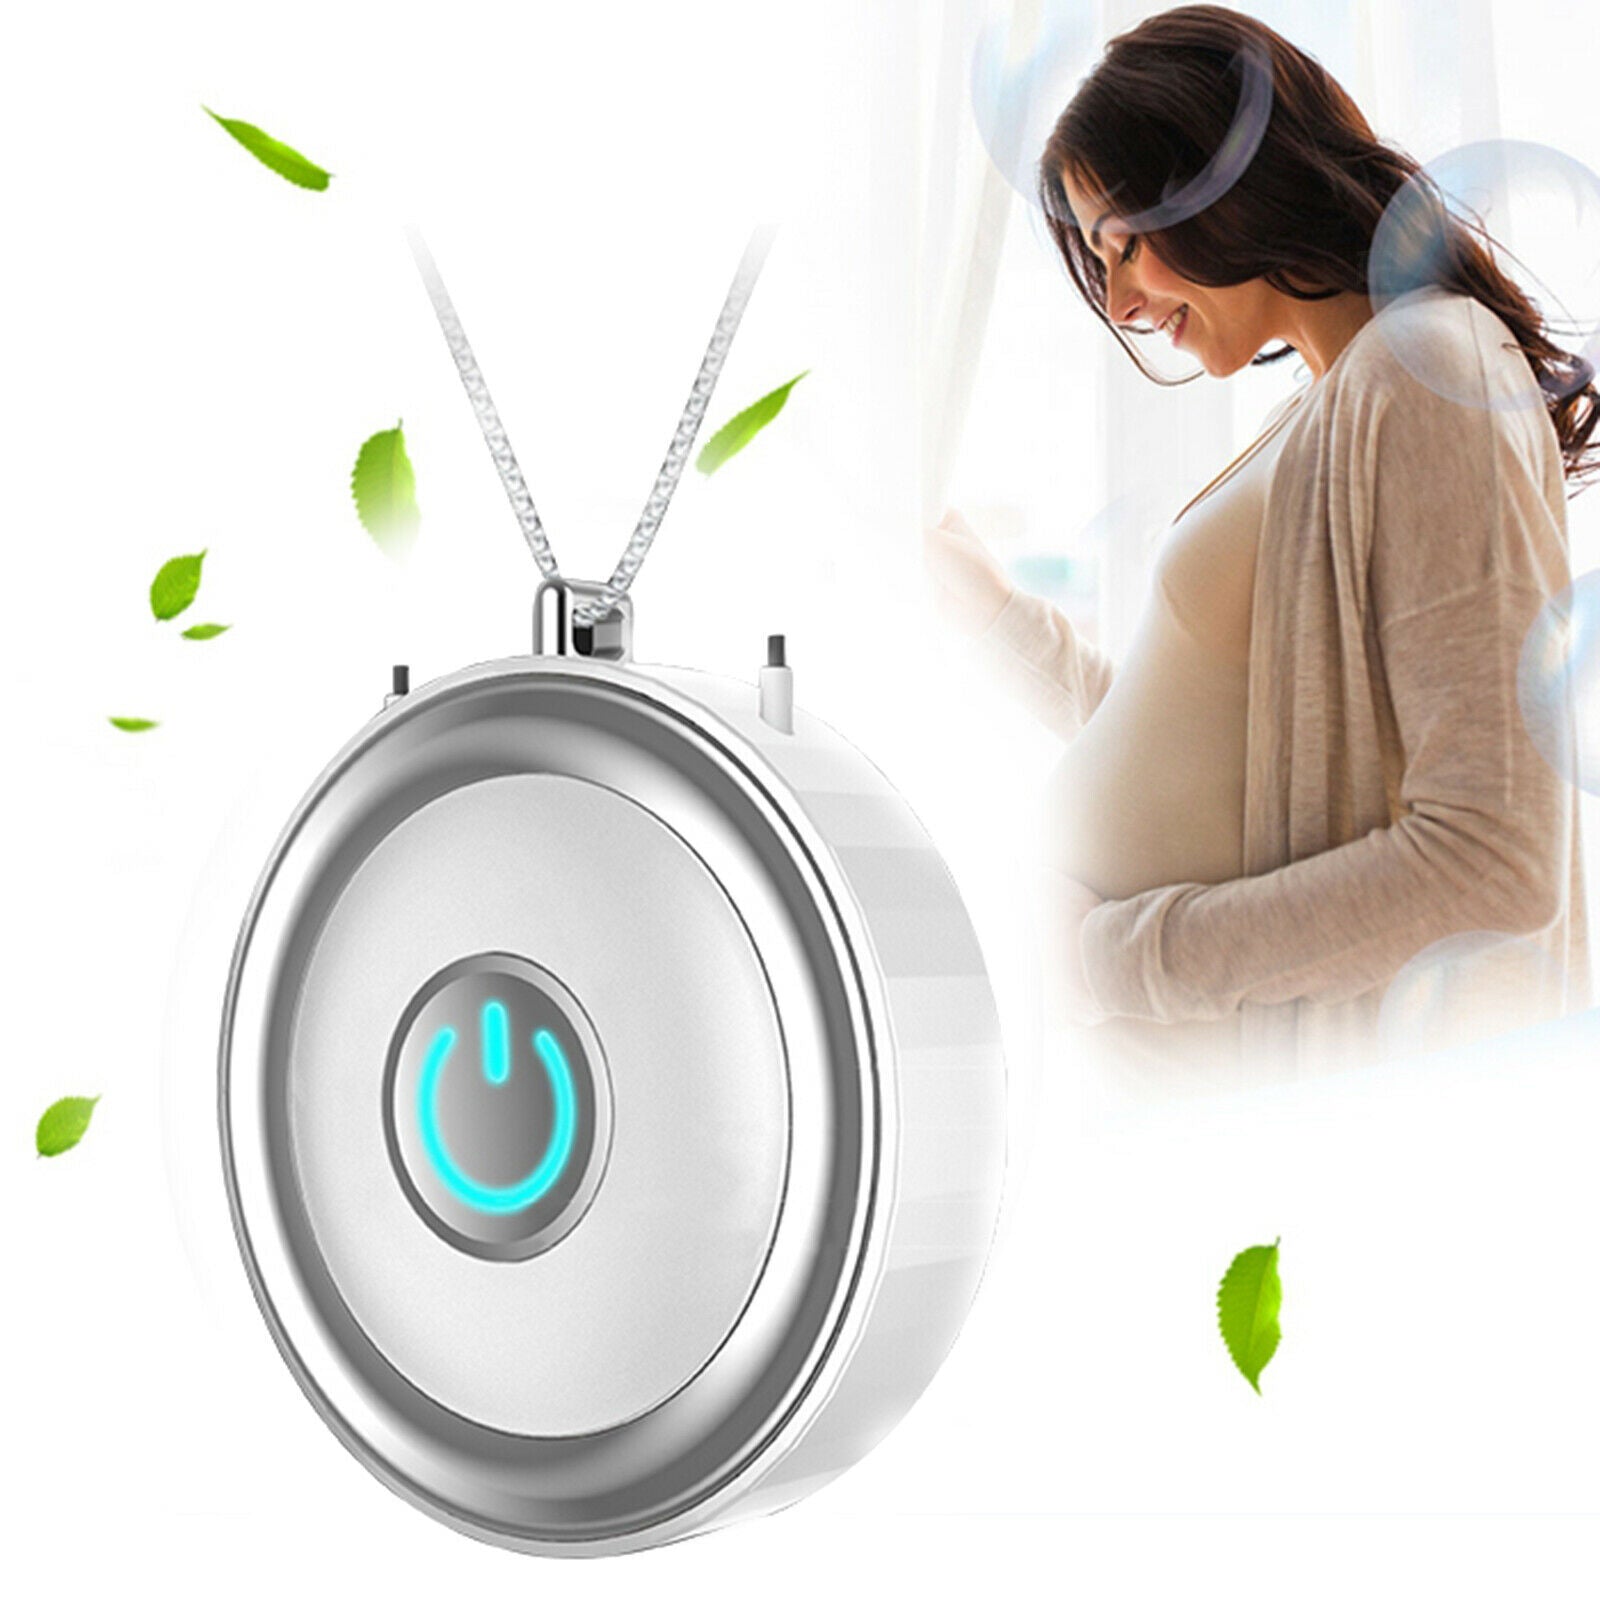 Mini Portable Wearable Air Freshner Personal Ion Air Freshener White